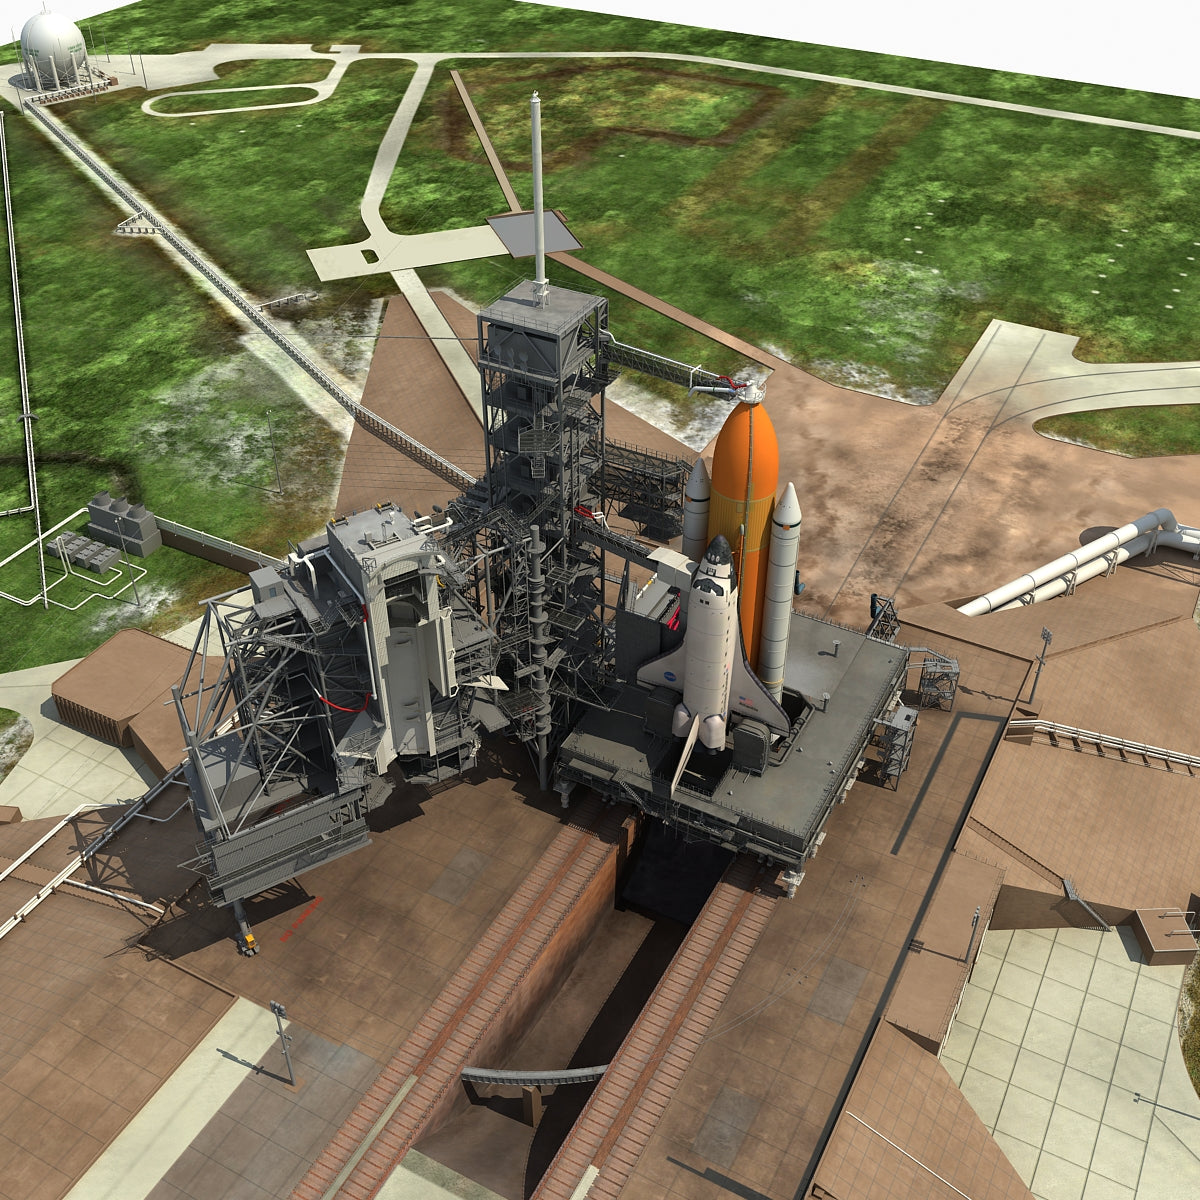 NASA Launch Complex 39-A